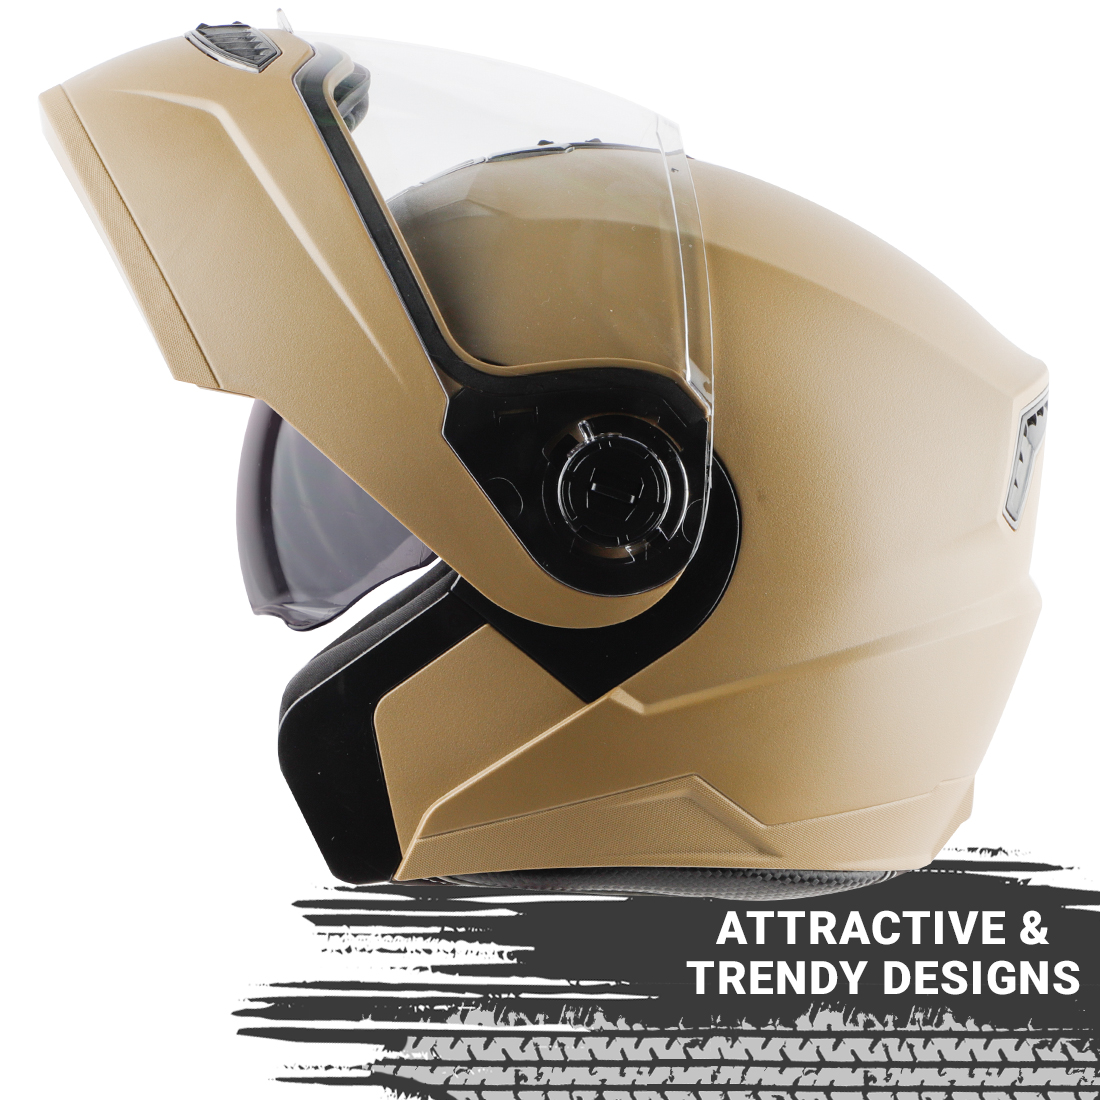 Steelbird SBA-7 7Wings ISI Certified Flip-Up Helmet For Men And Women With Inner Smoke Sun Shield (Dashing Desert Storm)